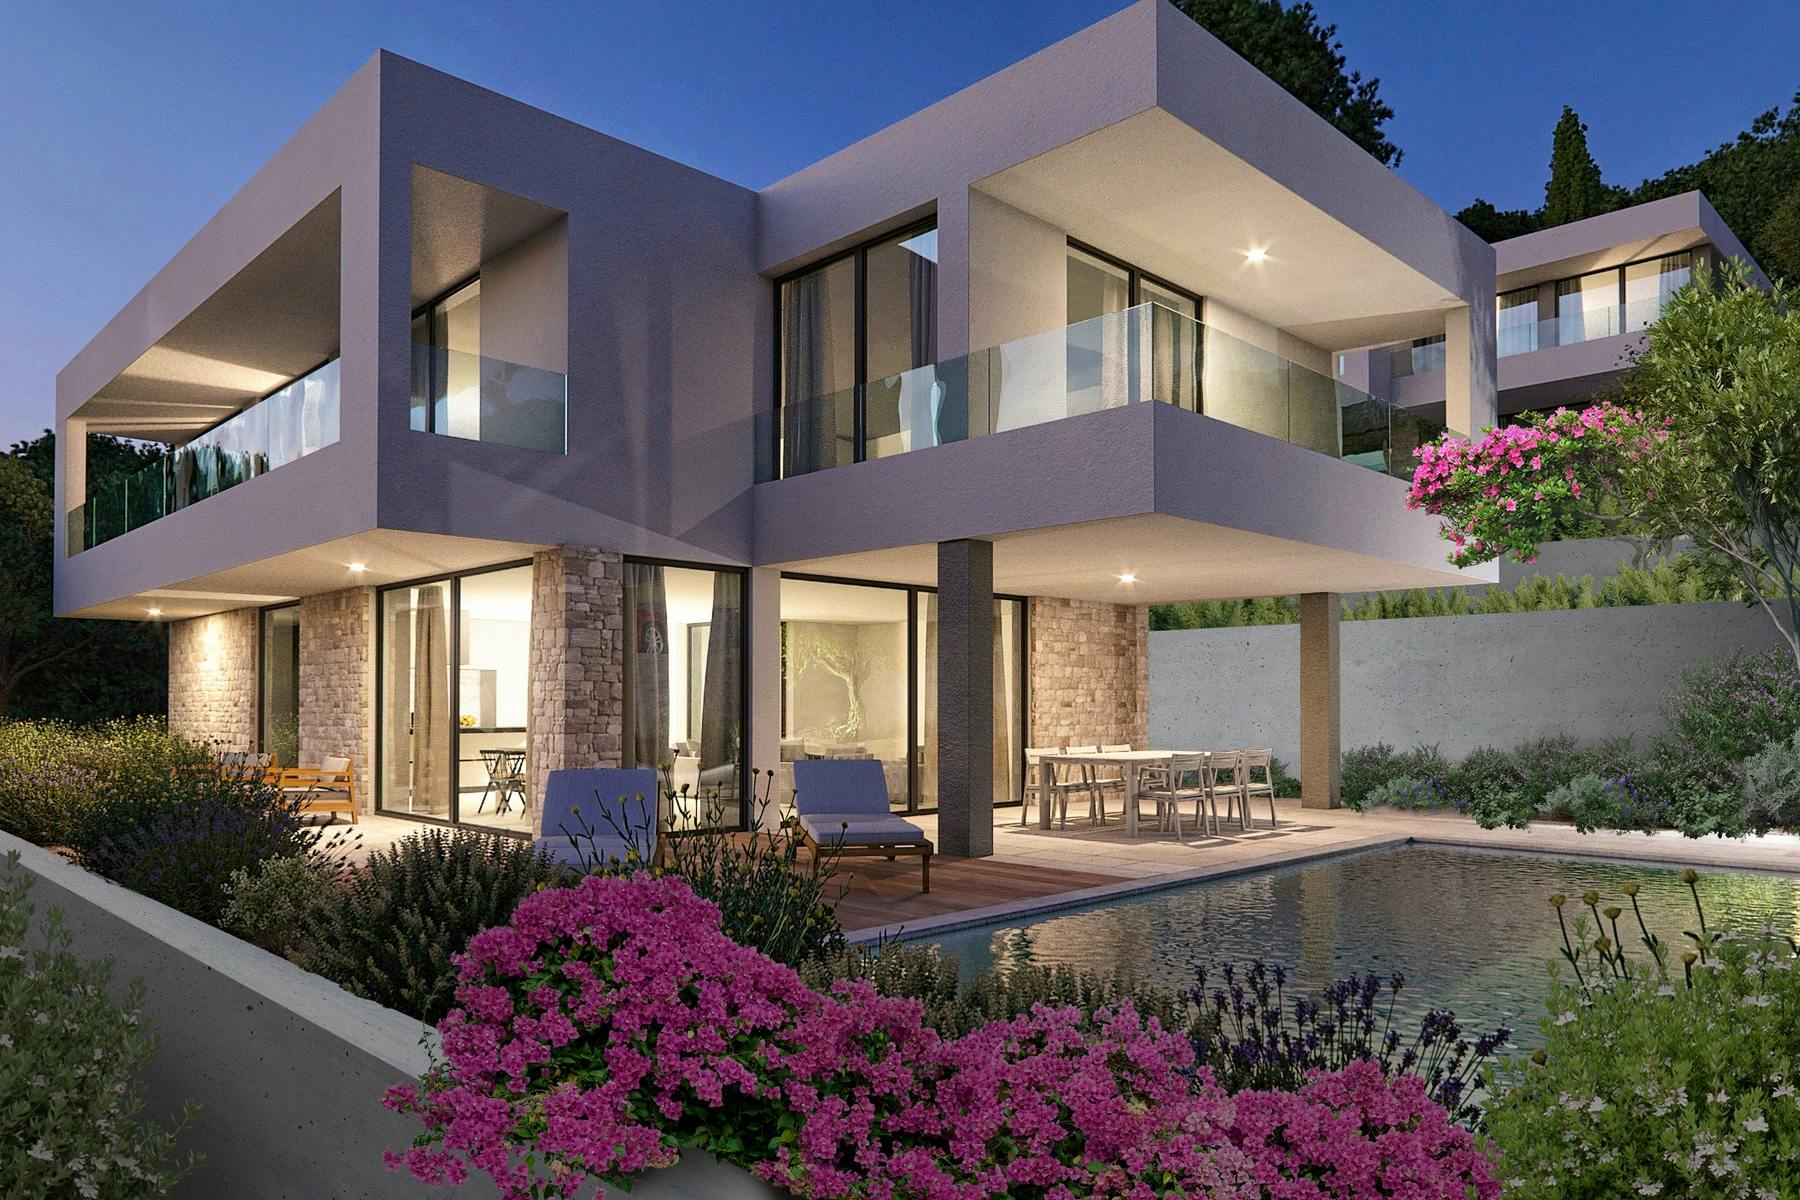 Contemporary villas with swimming pool and Mediterranean garden